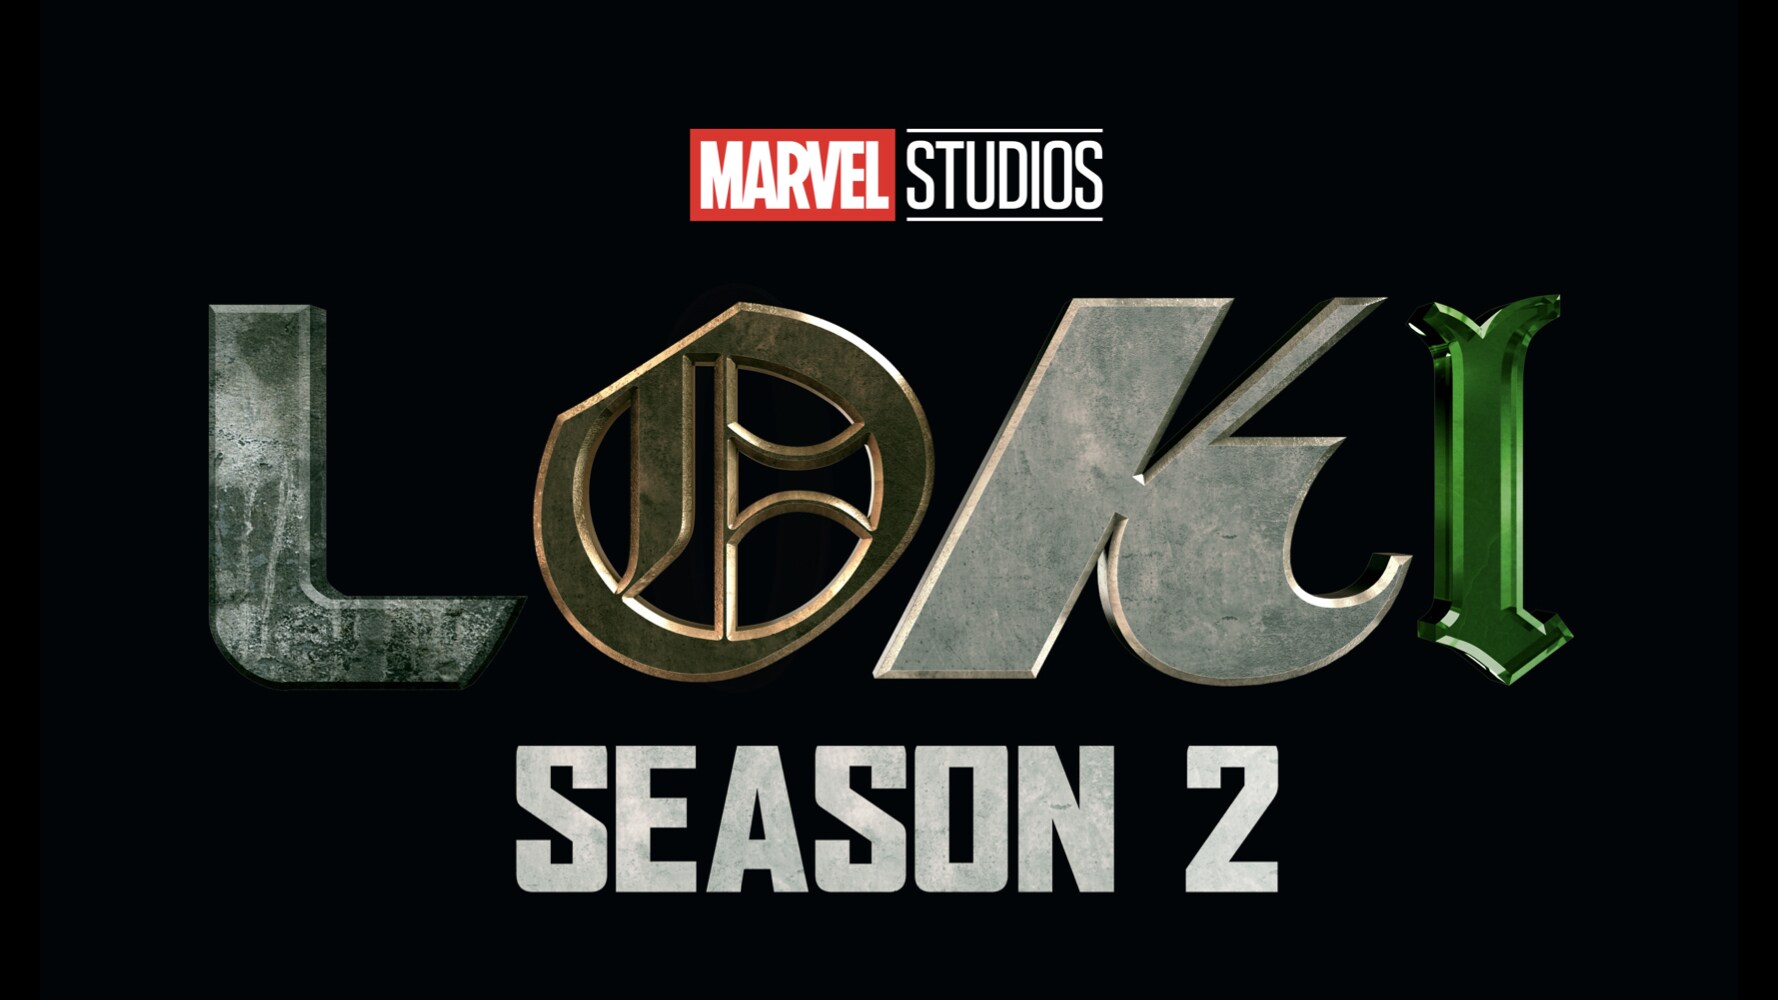 Disney+ Debuts New Featurette For Marvel Studios’ “Loki” Season 2